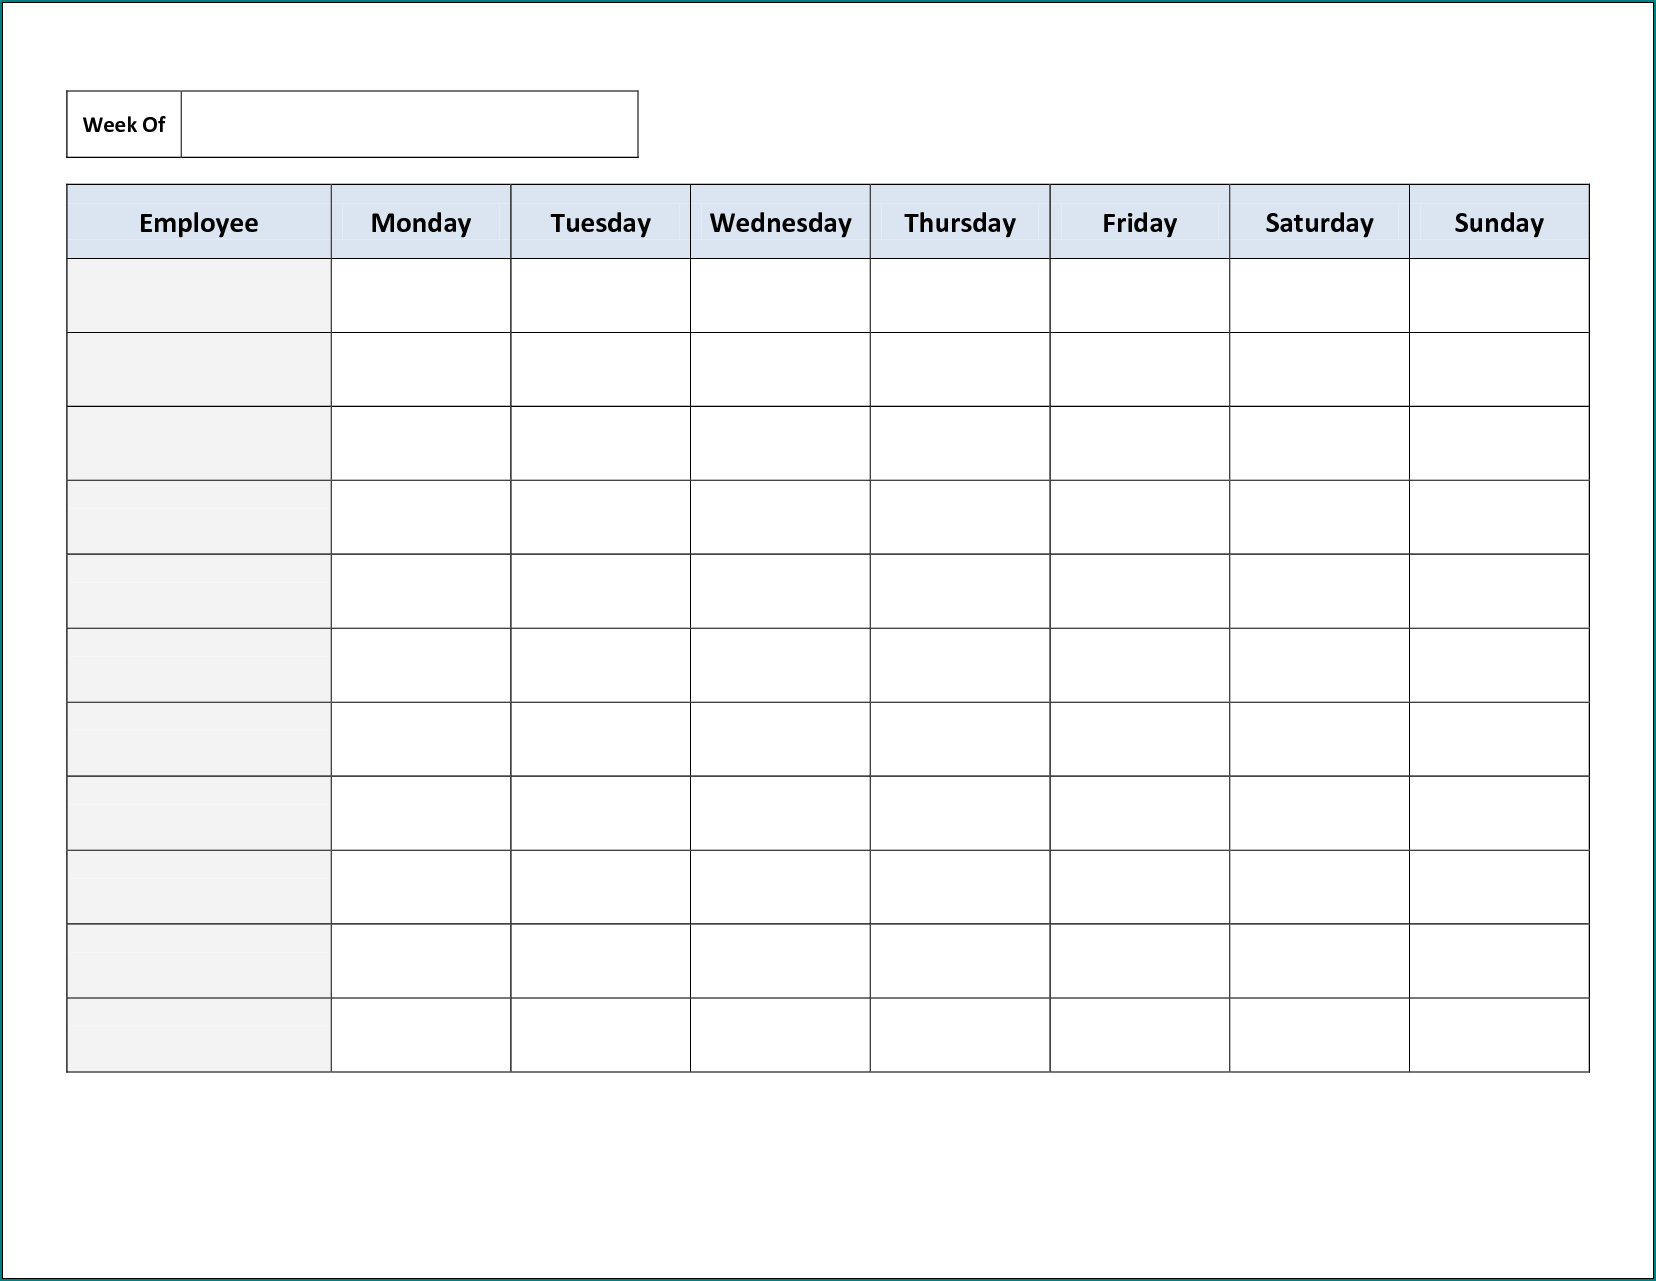 Sample of Employee Schedule Template